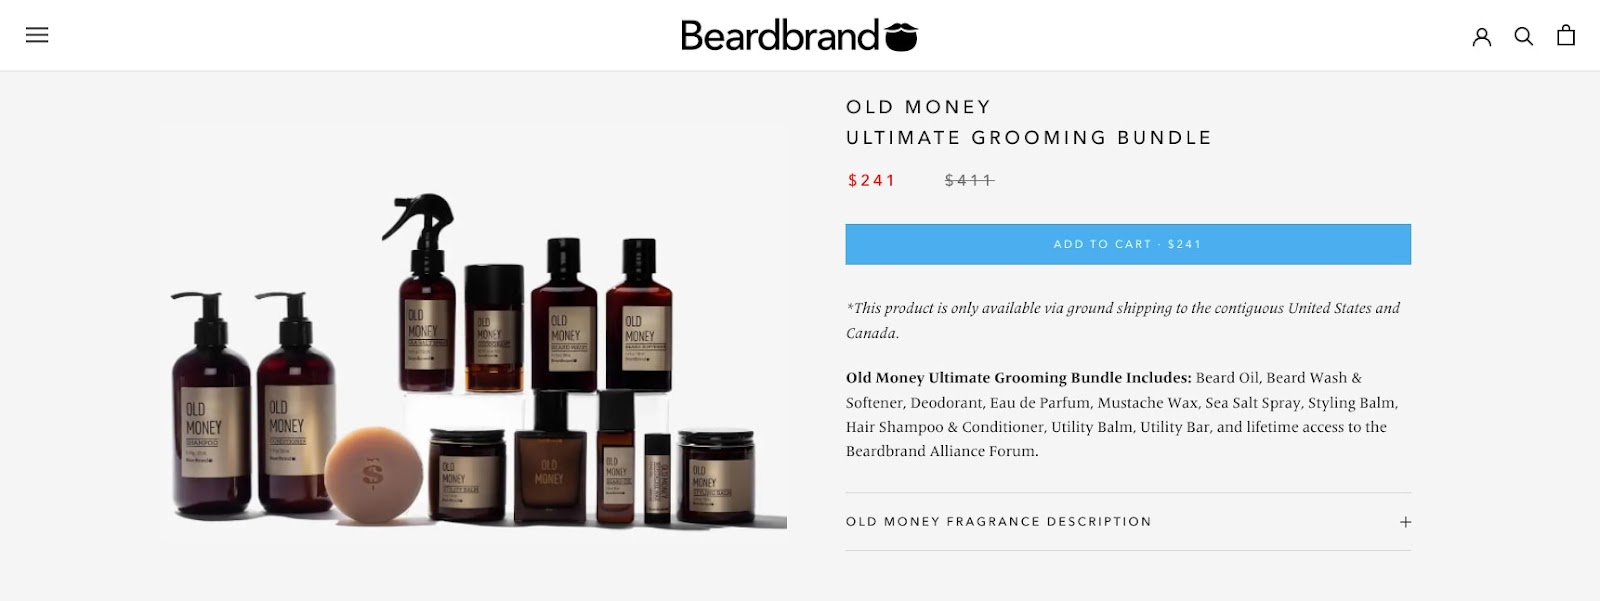 beardbrand grooming product bundle promotional strategy